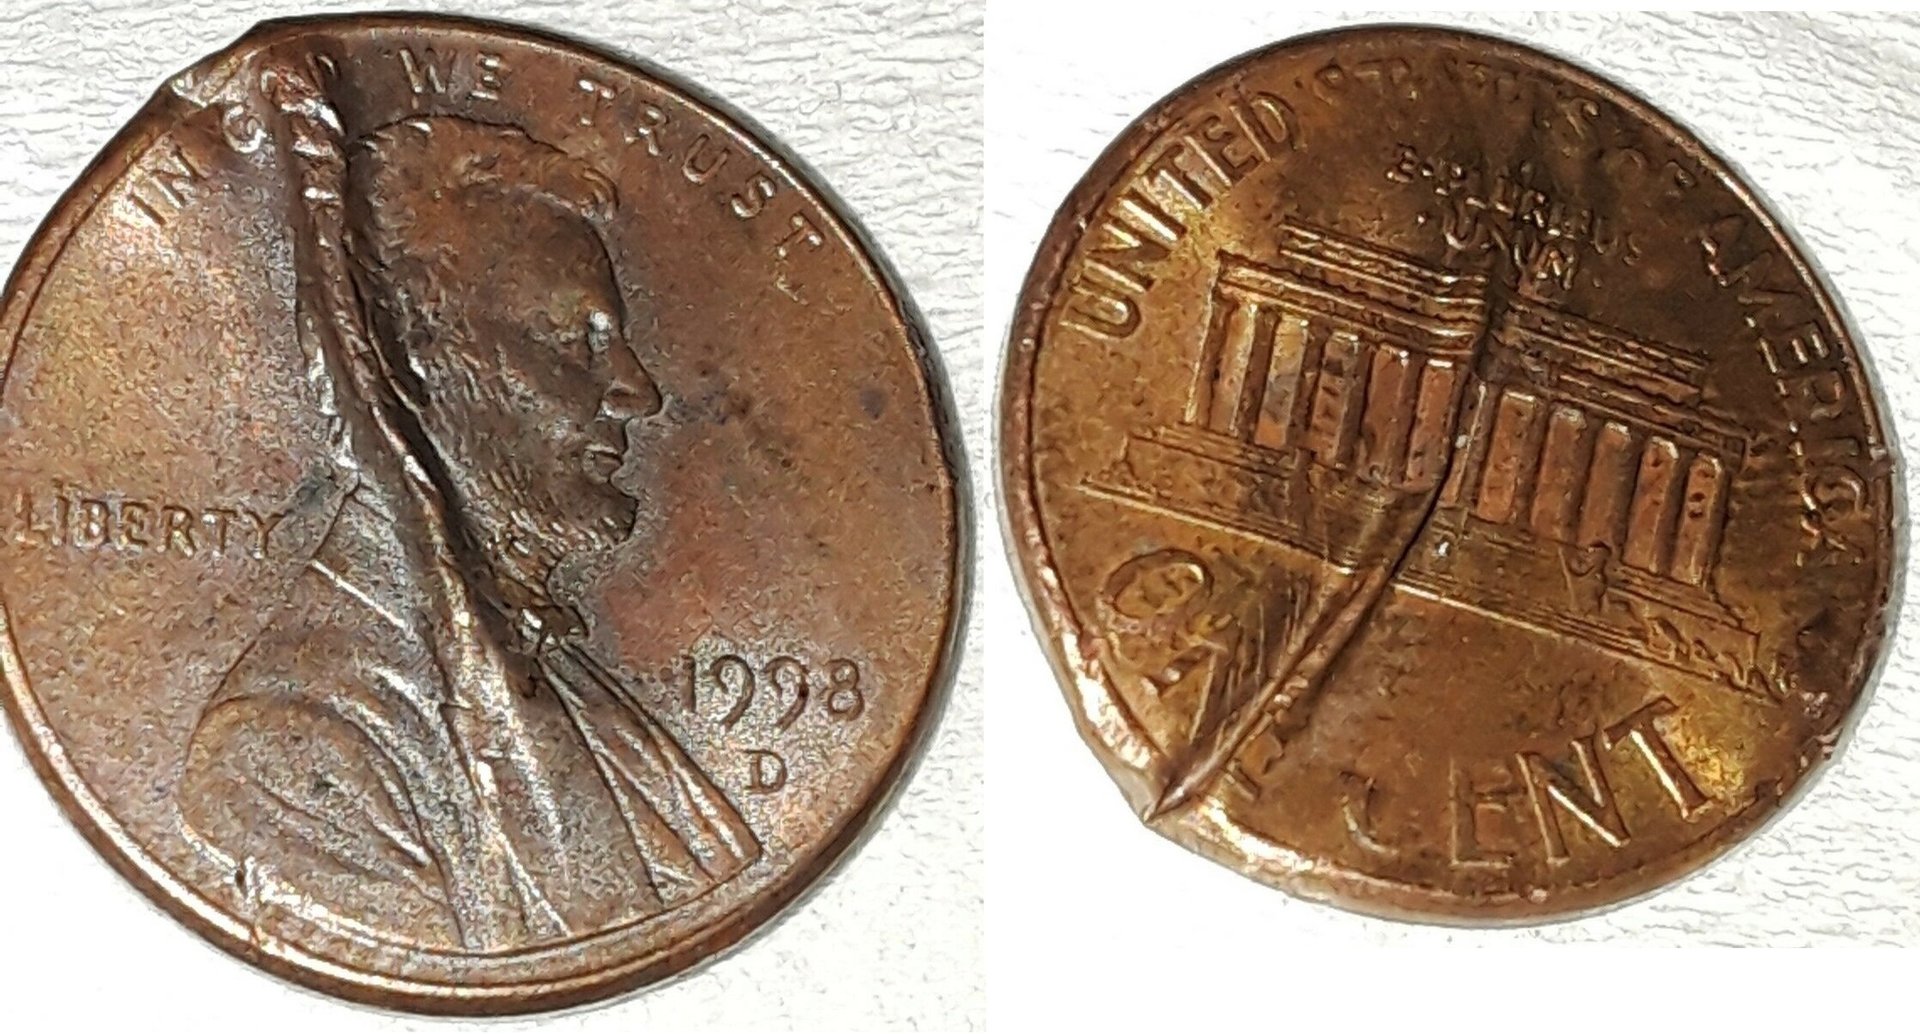 1998 D Penny Error-Damage Cent Defective Coin  $9.50 + $2.84  254213809702  coincidence4you a.jpg